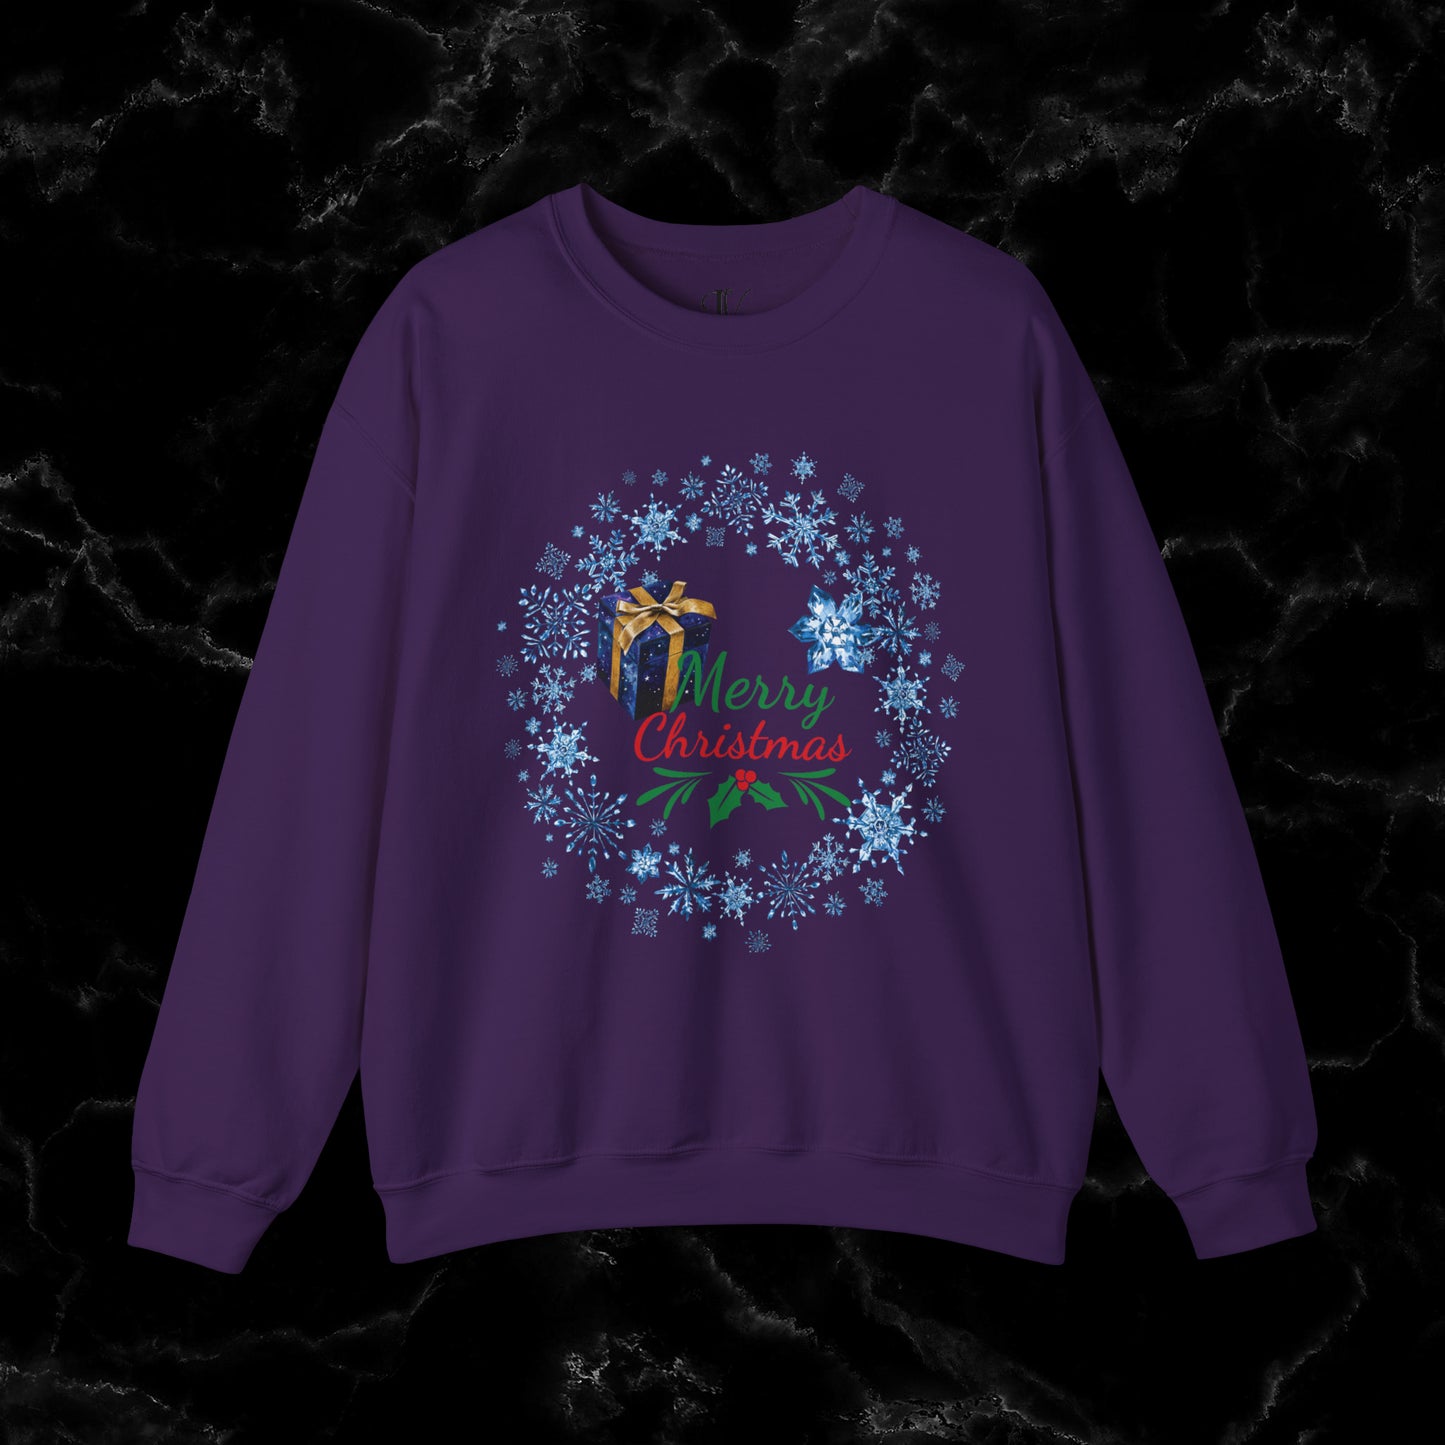 Merry Christmas Sweatshirt - Matching Christmas Shirt, Wreath Design, Holiday Gift Sweatshirt S Purple 